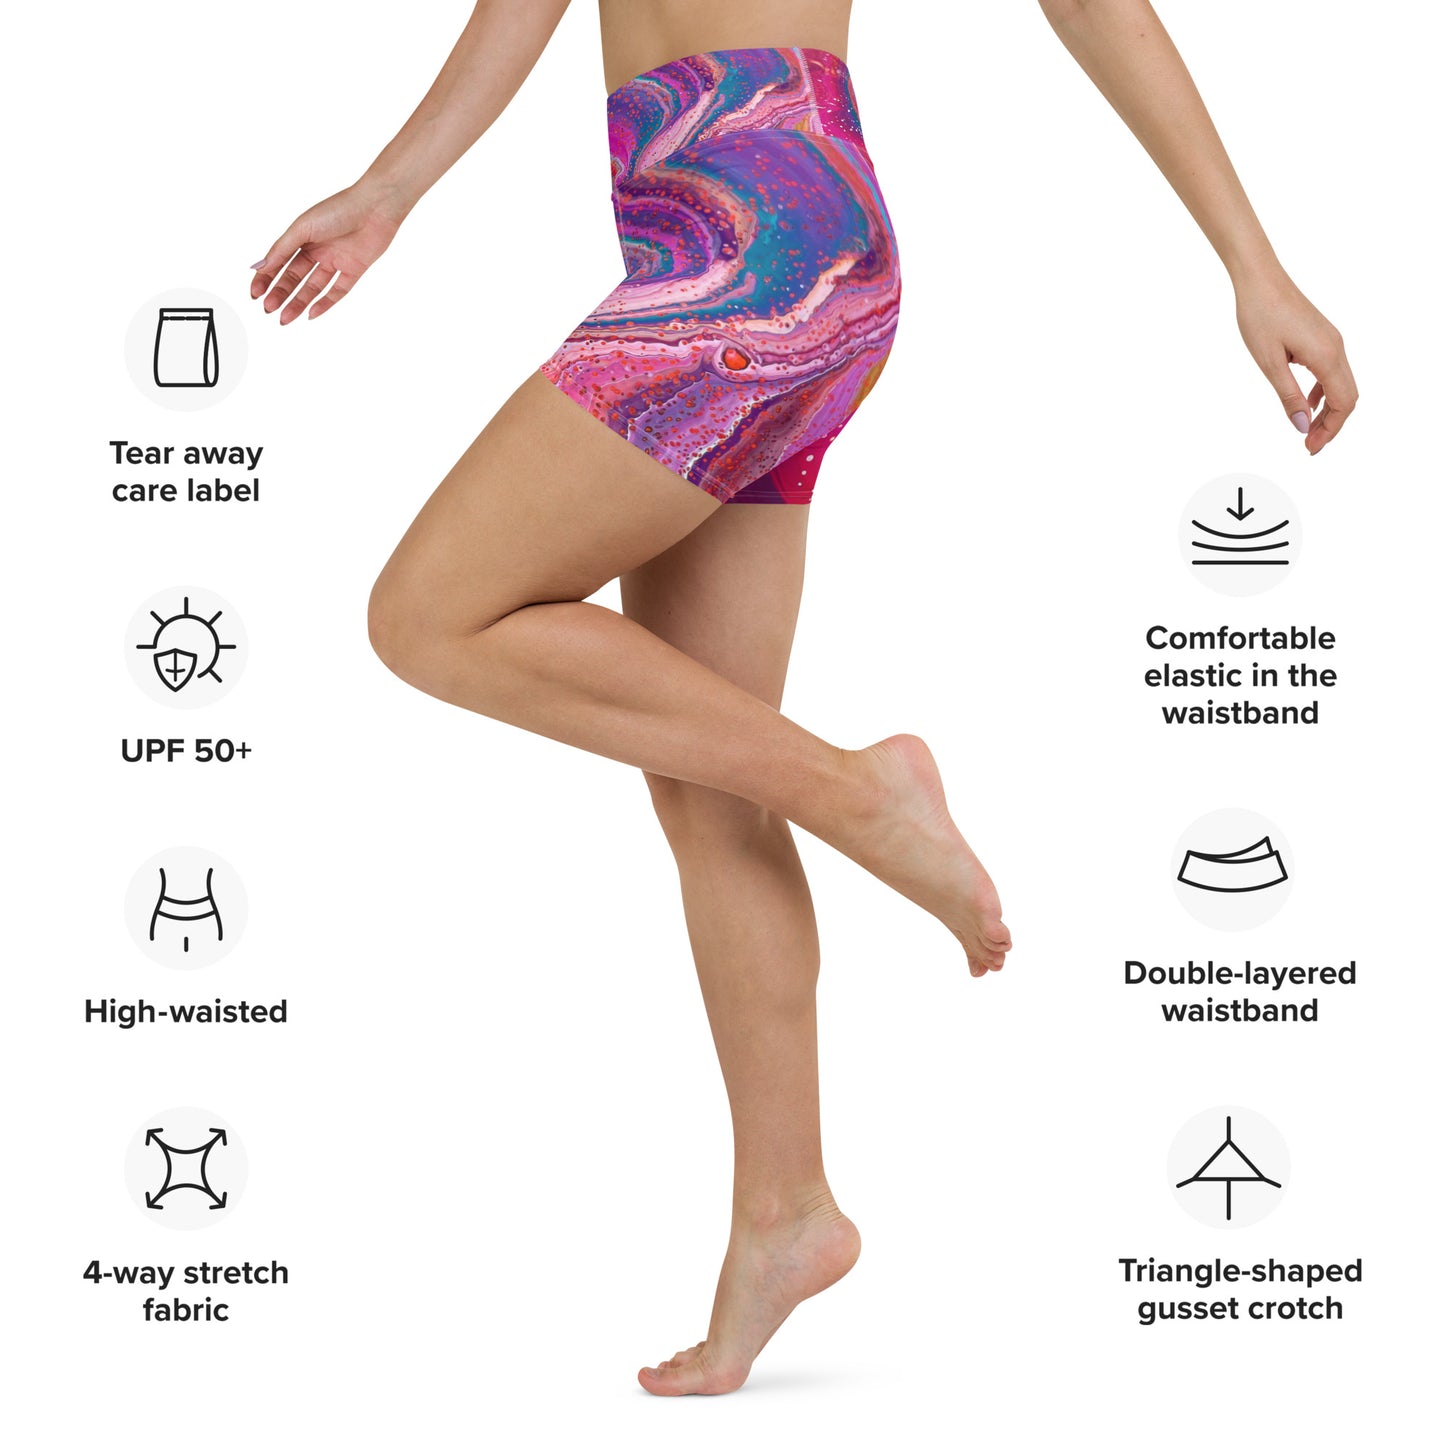 Shorts de ioga - design cósmico